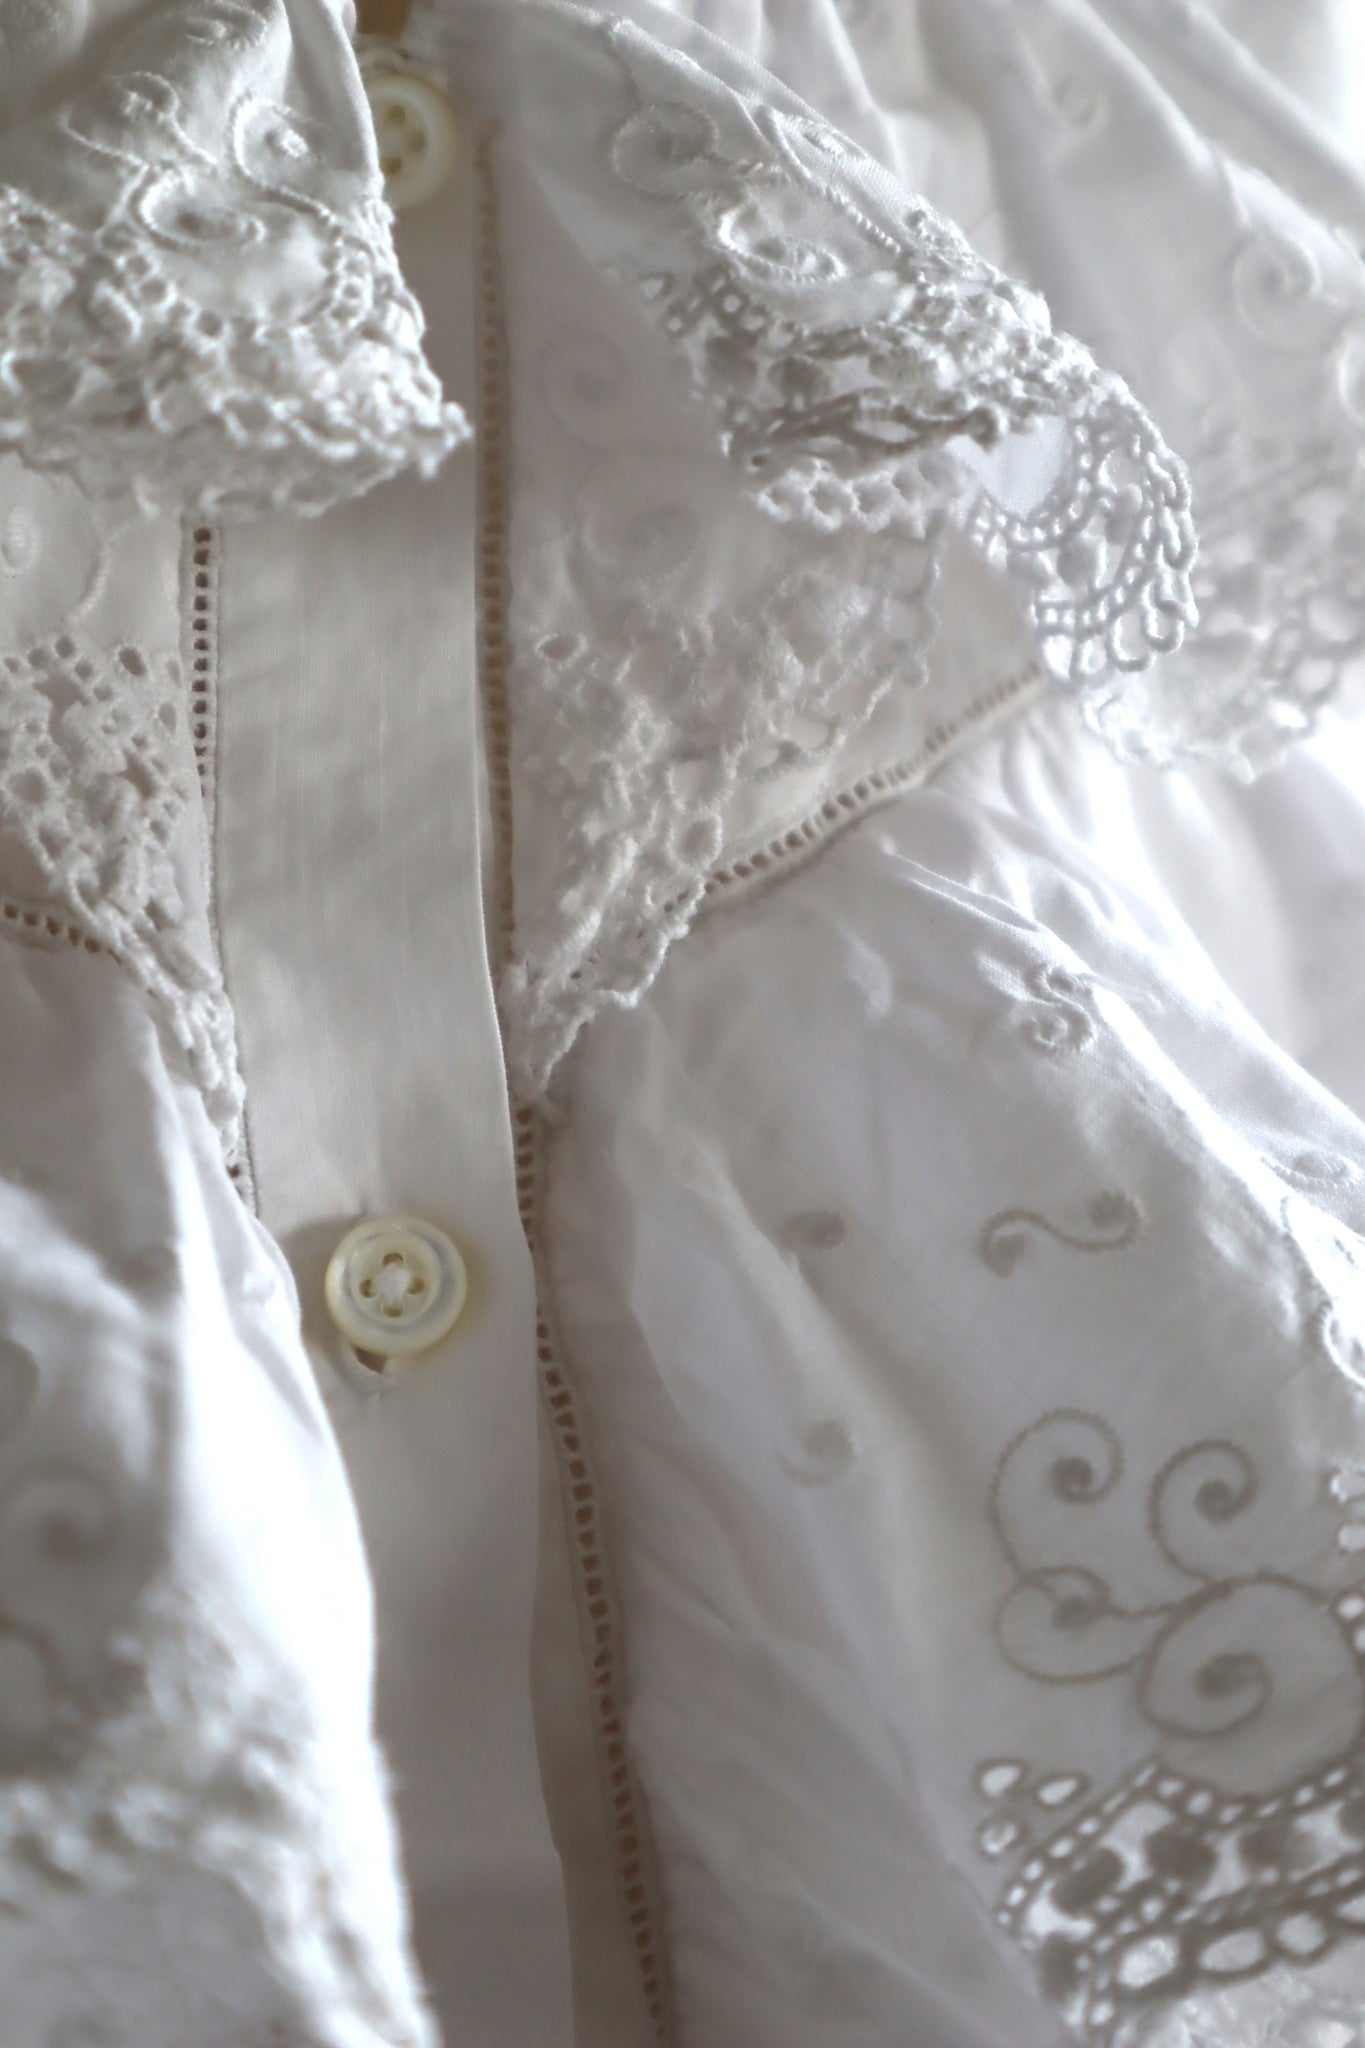 1900s Edwardian Hand Sewn Frilly Collar White Cotton Ruffled Blouse